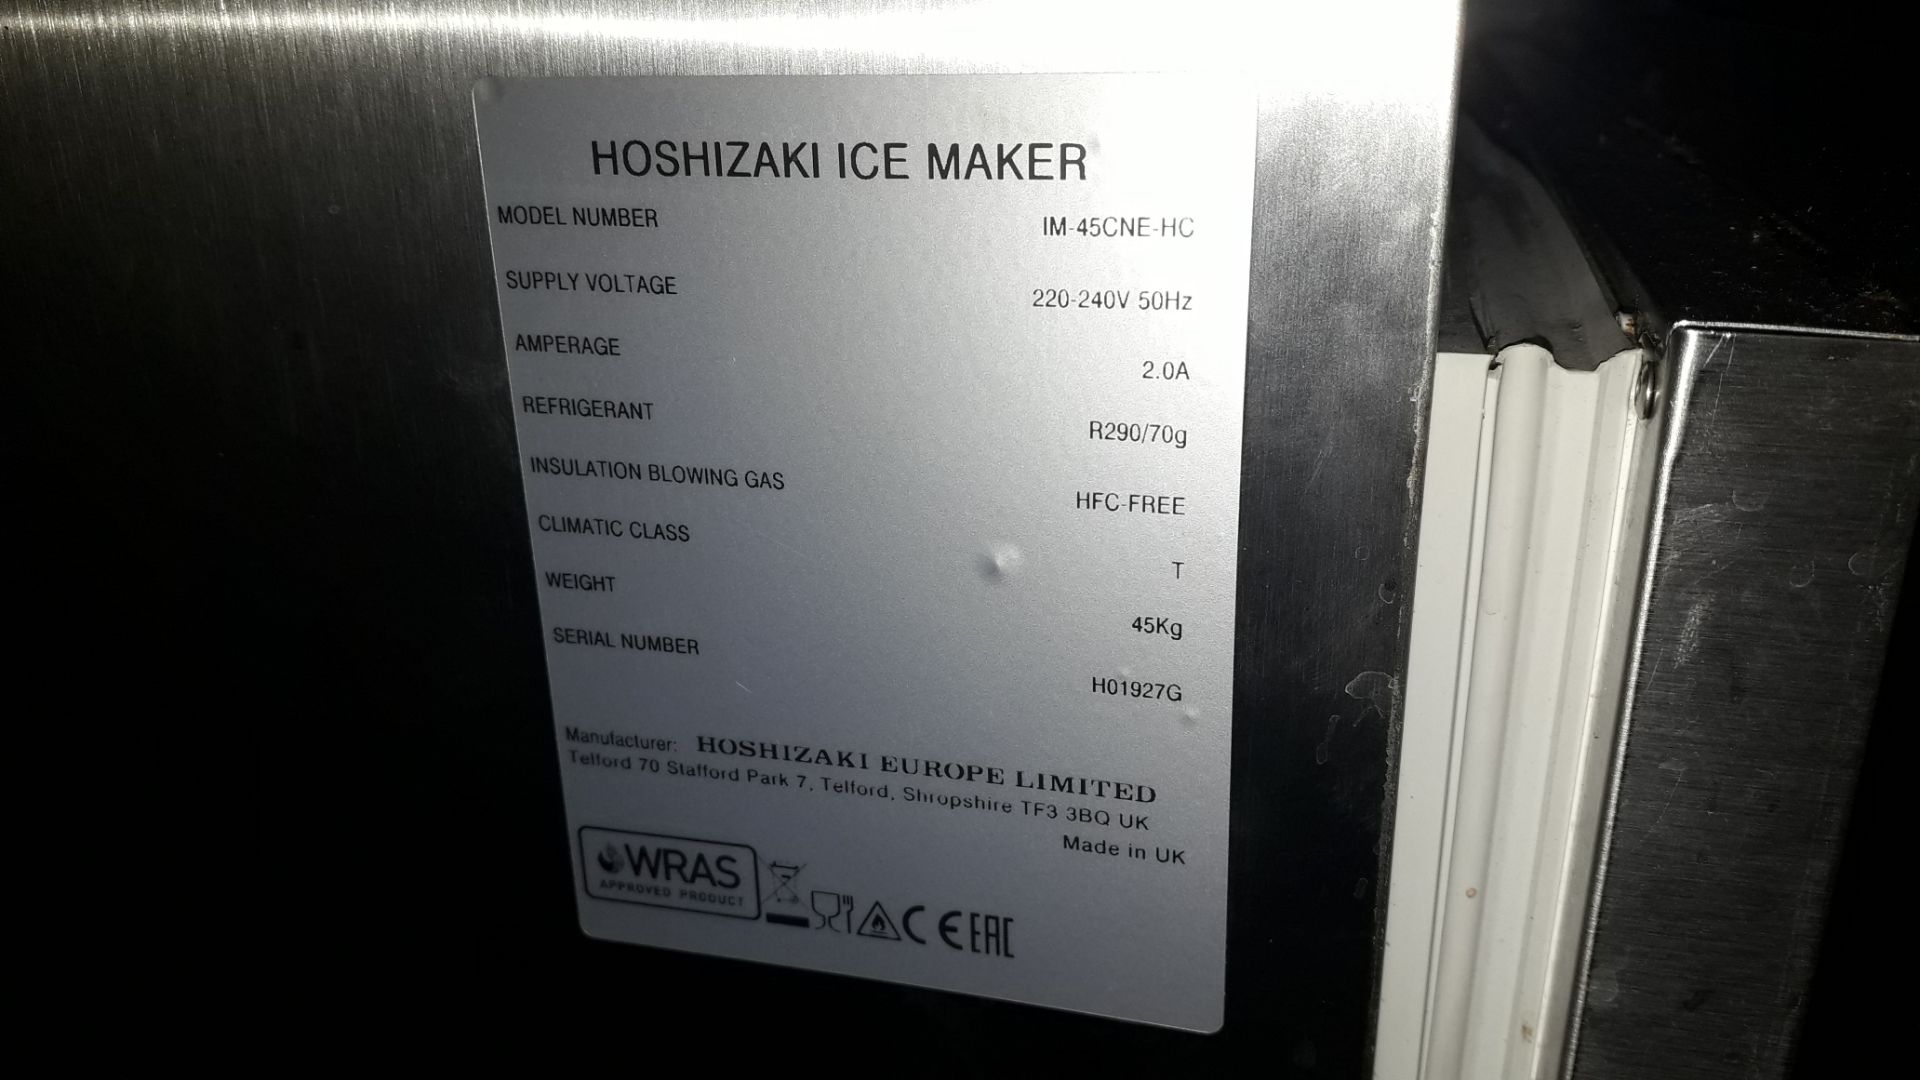 Hoshizaki IM-45CNE-HC Stainless Steel Ice Maker, S - Image 4 of 4